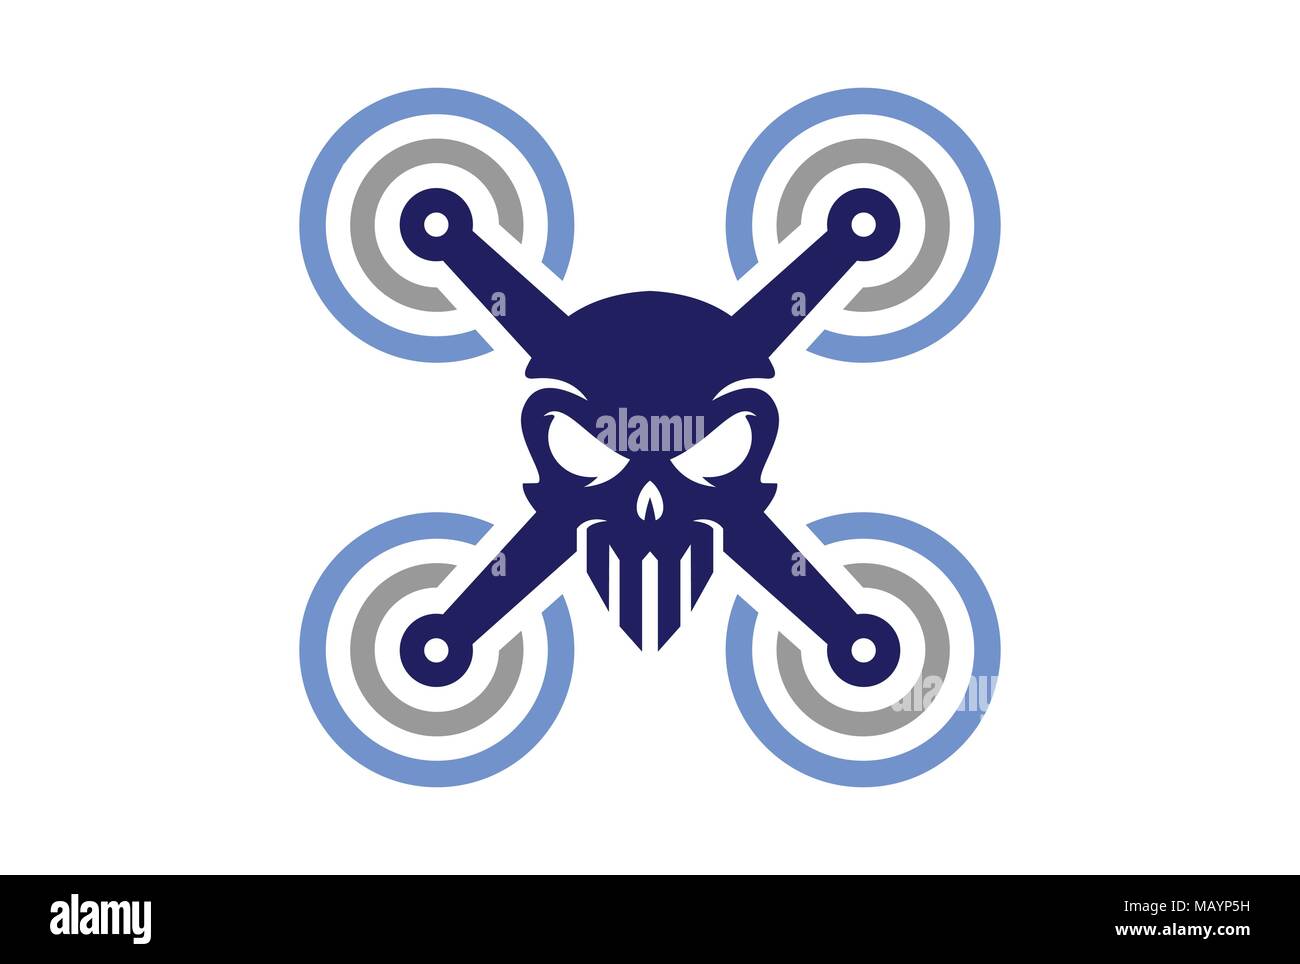 drone skull abstract logo icon Stock Vector